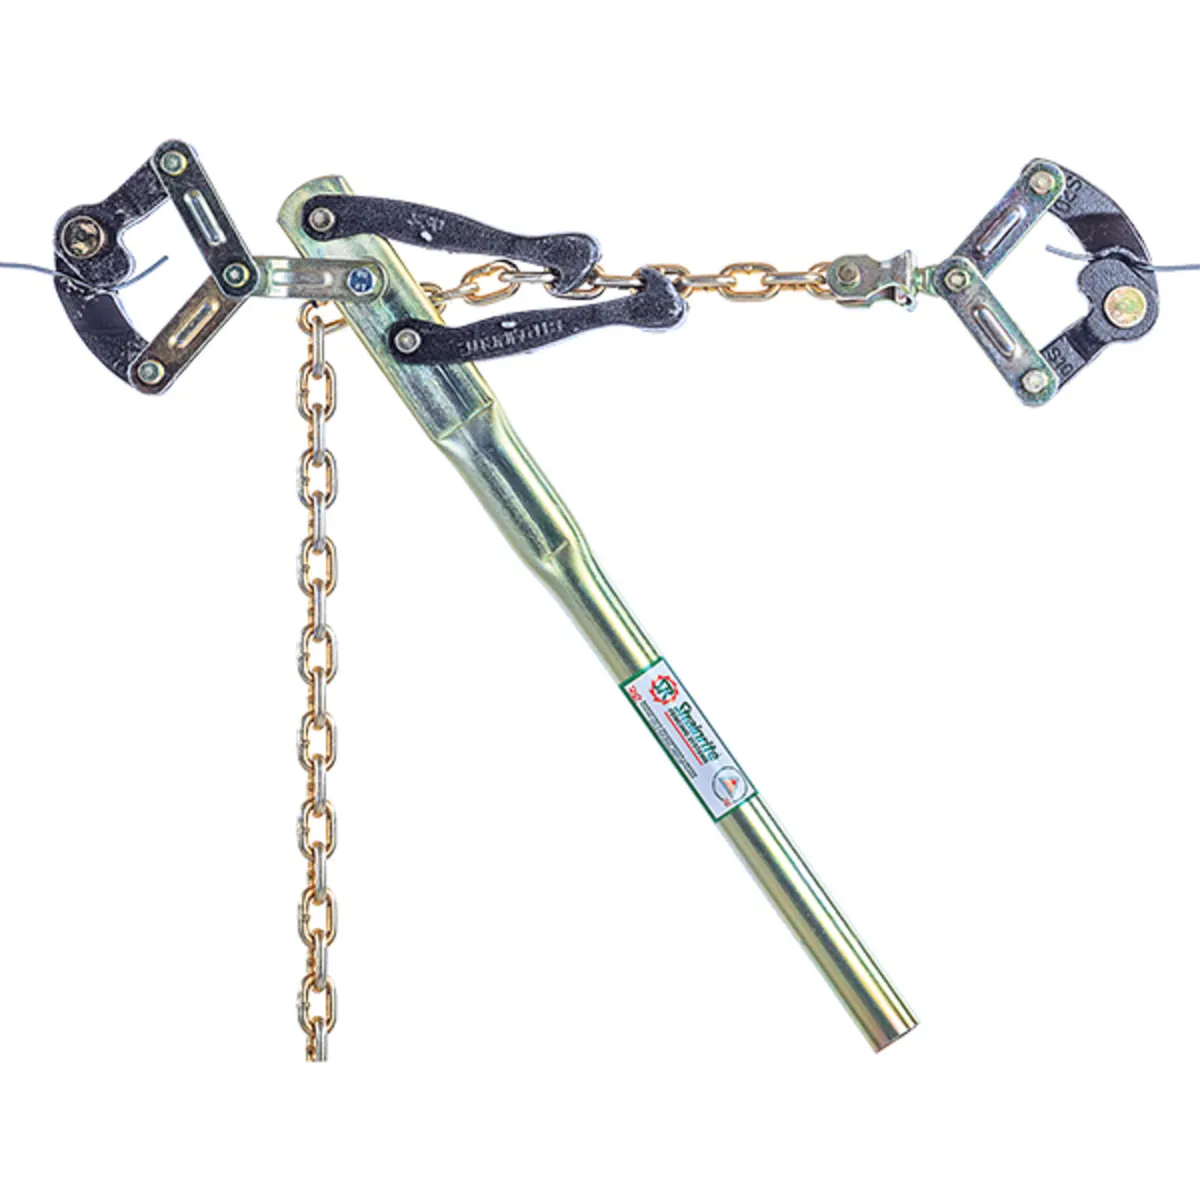 Strainrite Professional Chain Strainer - Image 1